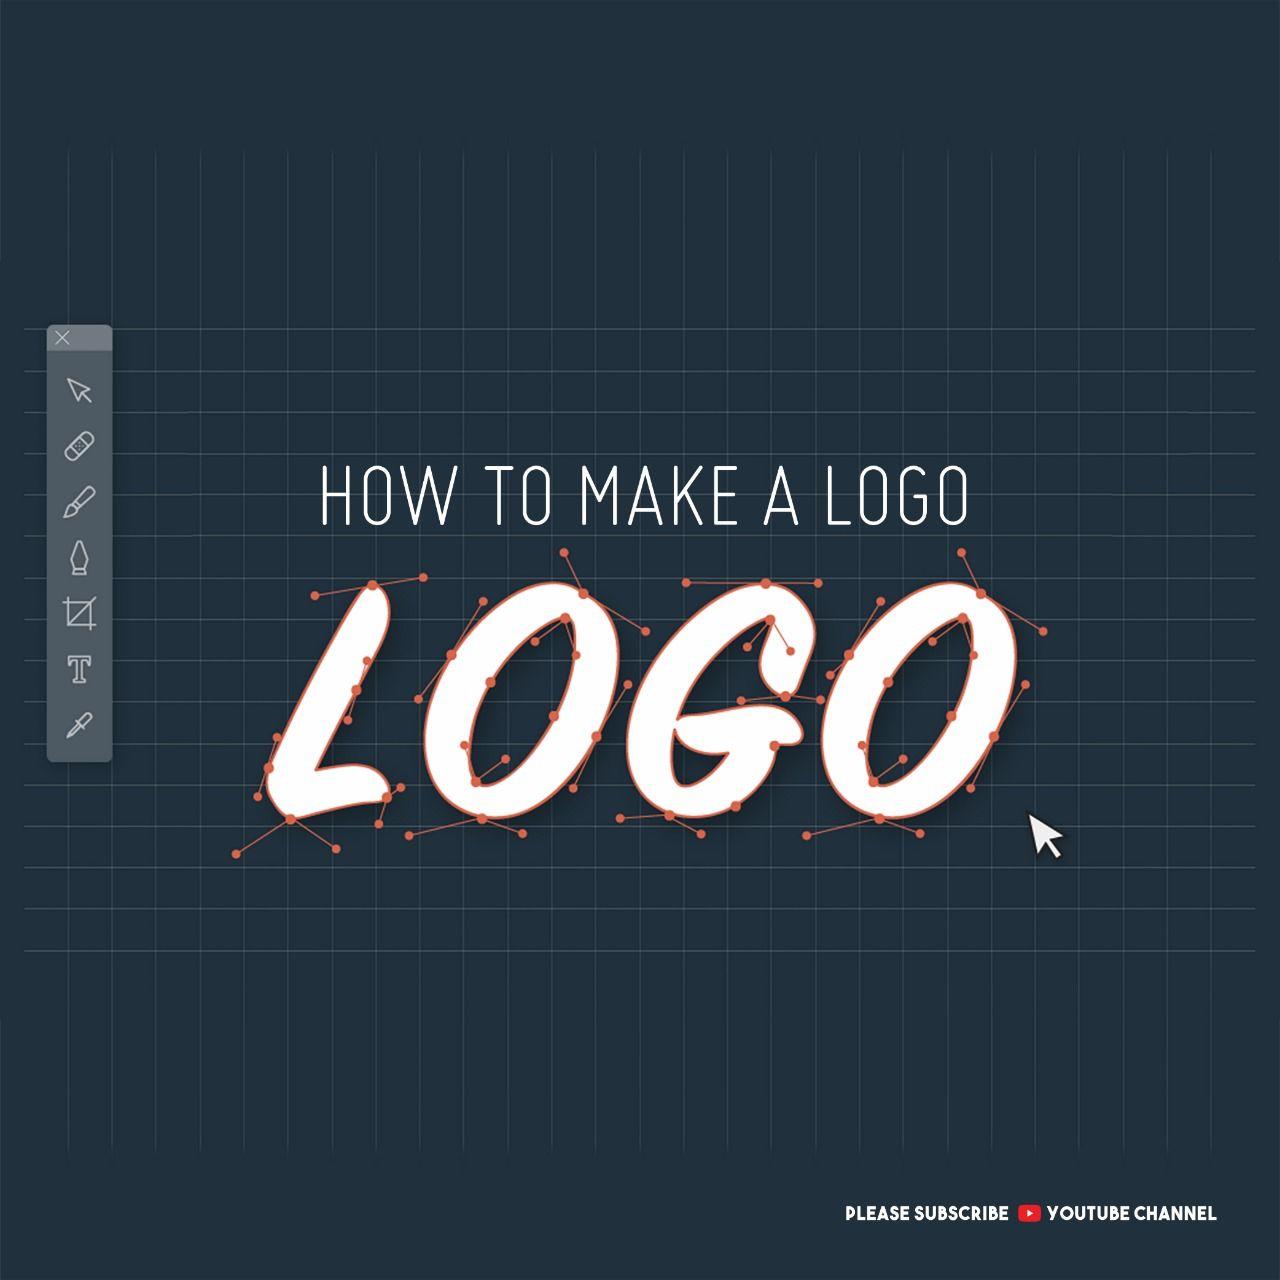 Simplylogo Logo - How to Make Simply Logo in Corel Draw - The Common Topics